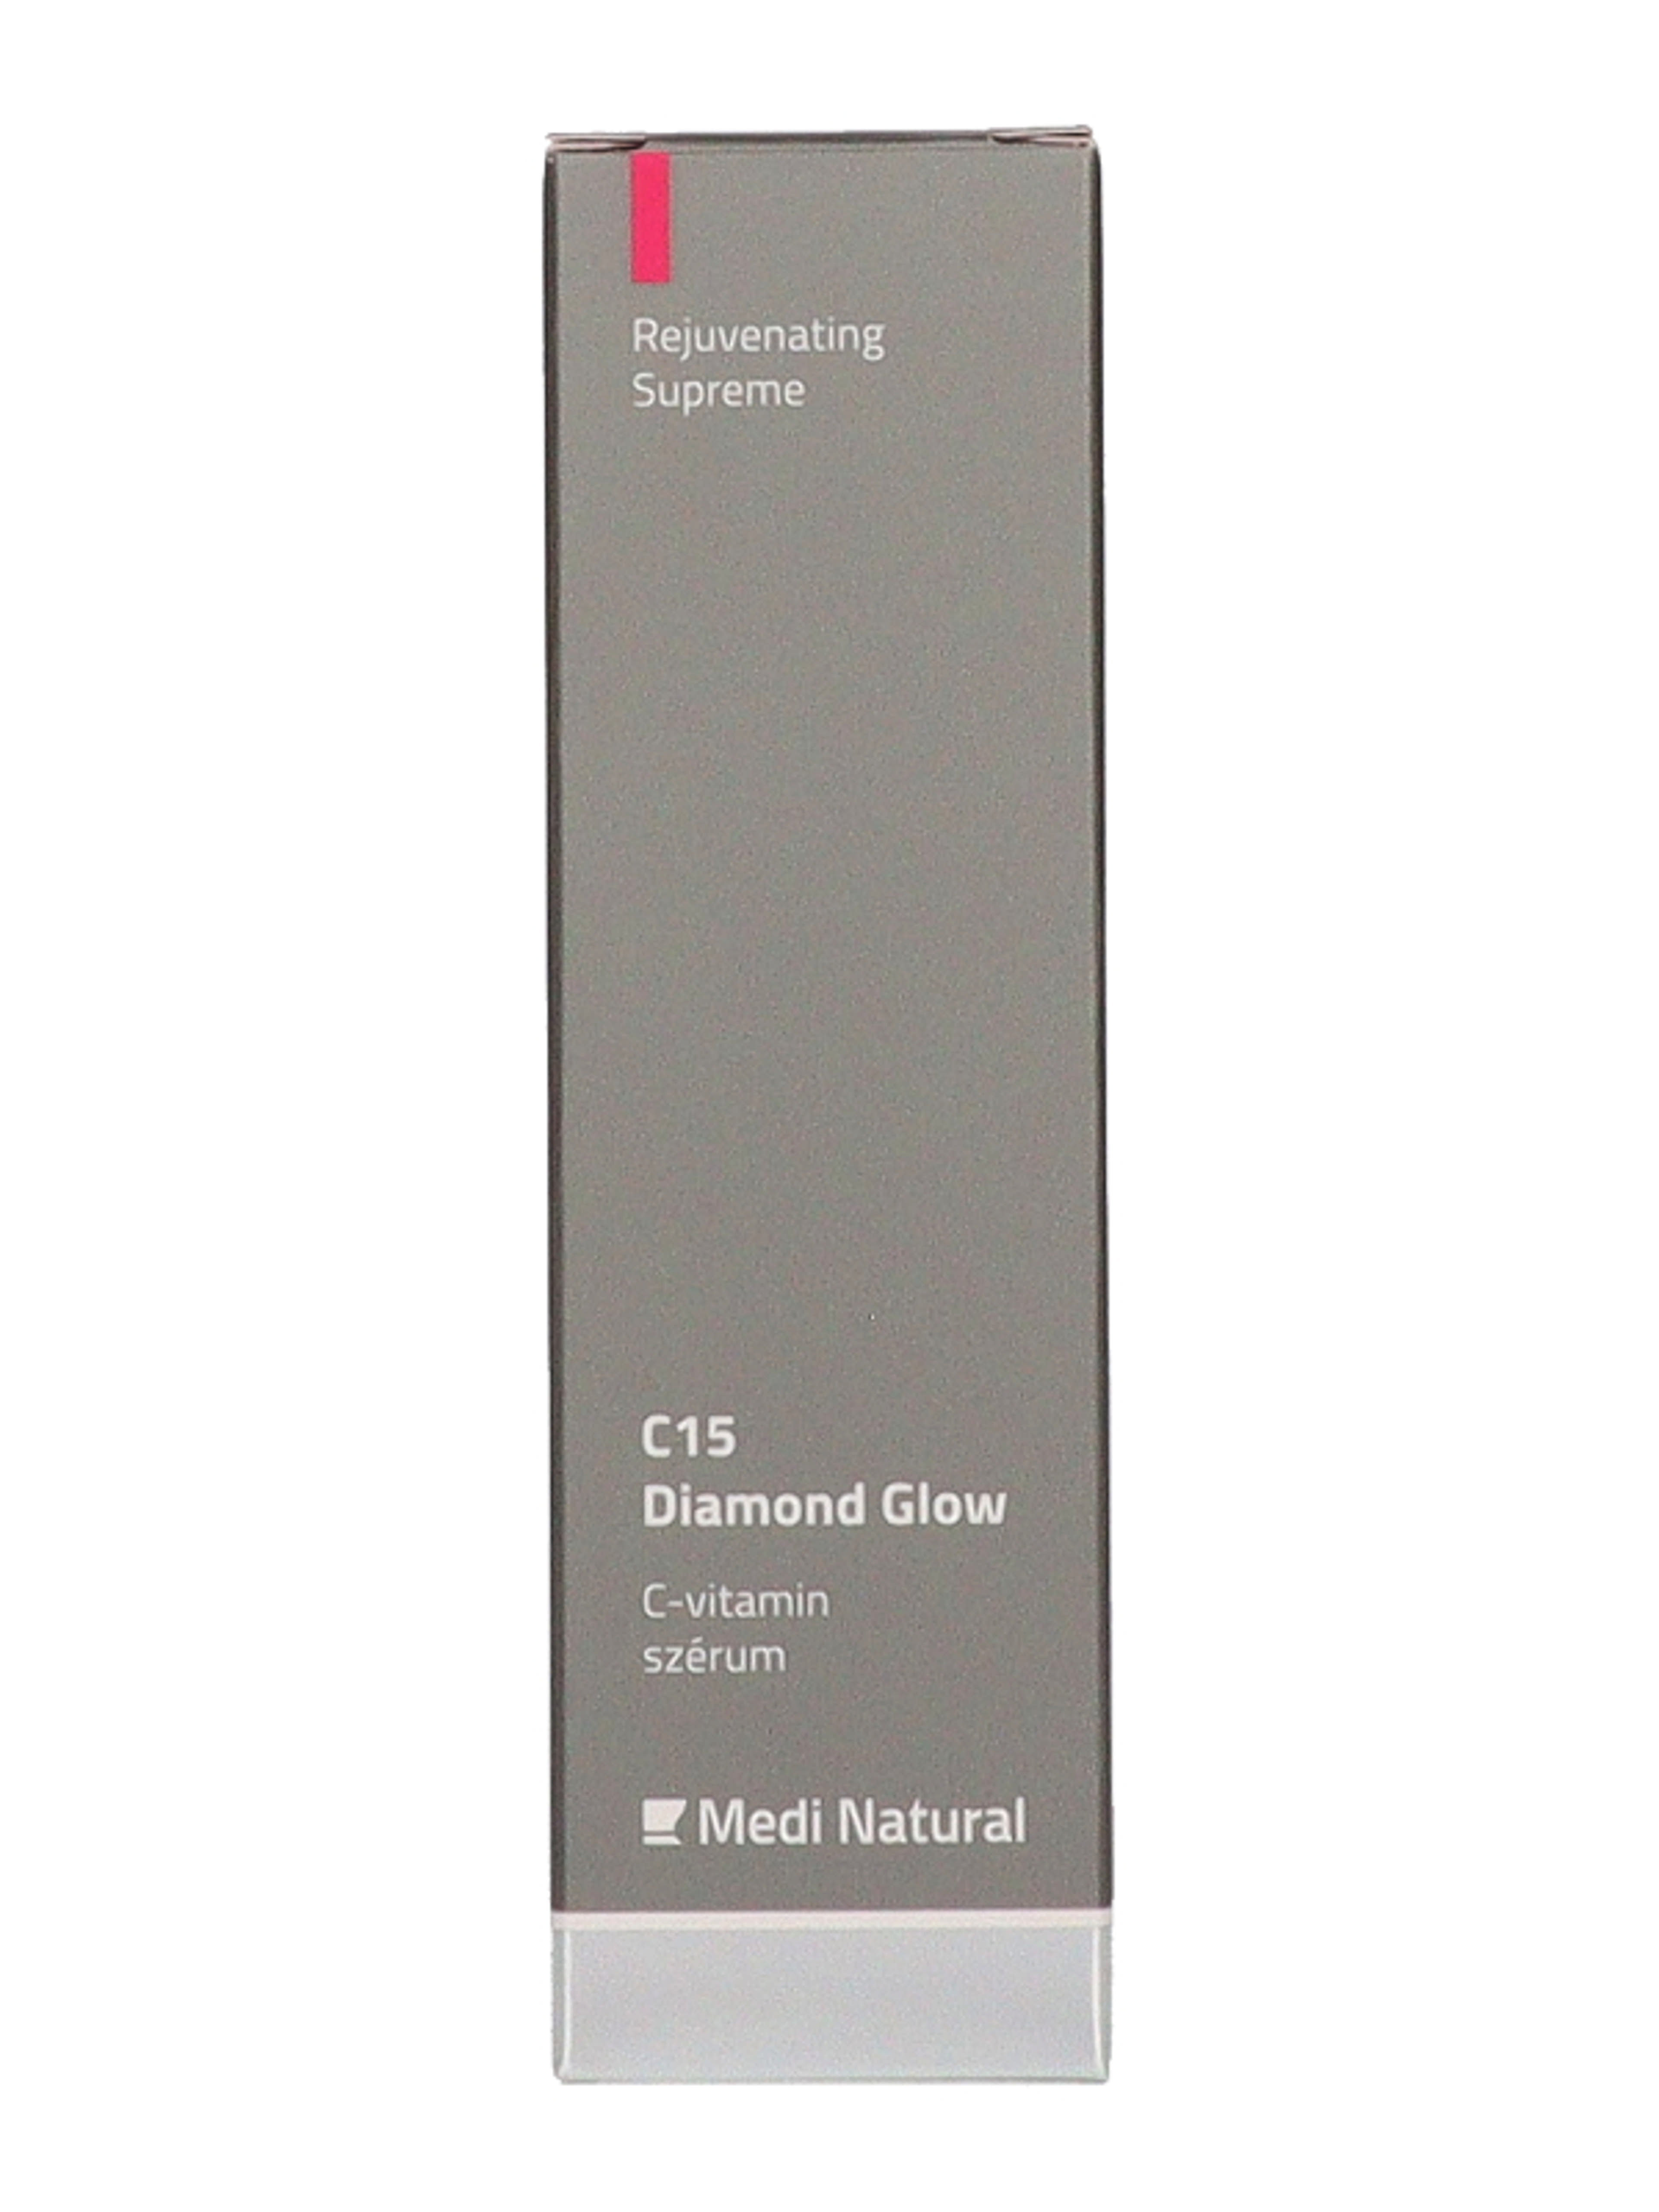 Meid Natural C15 Diamond Glow C-vitamin szérum - 30 ml-2